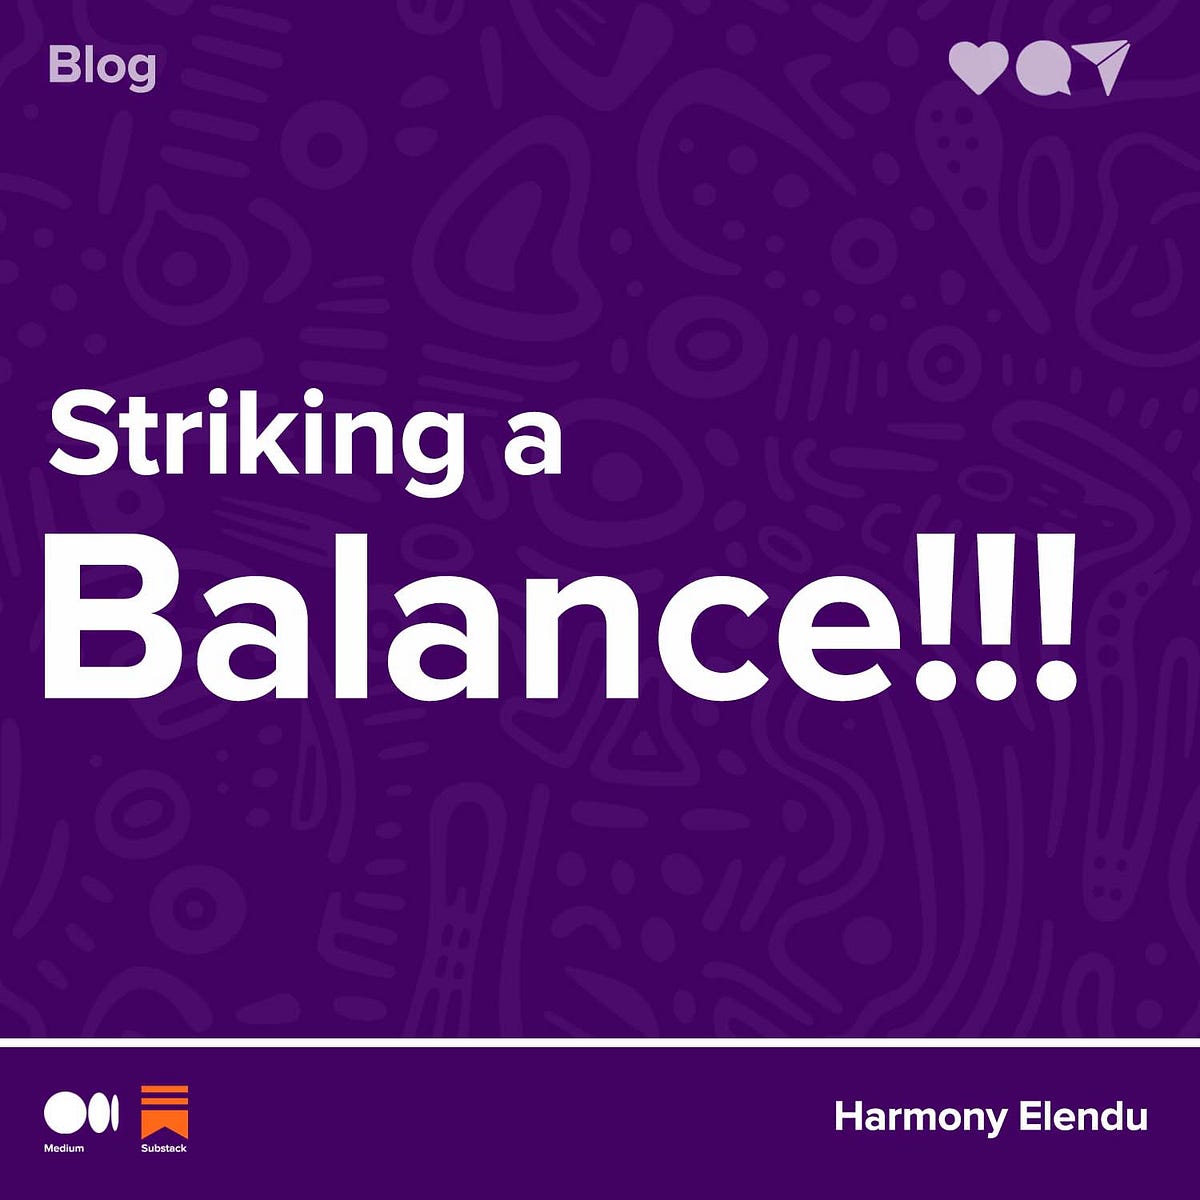 Striking a Balance!!!. Striking a balance is somet